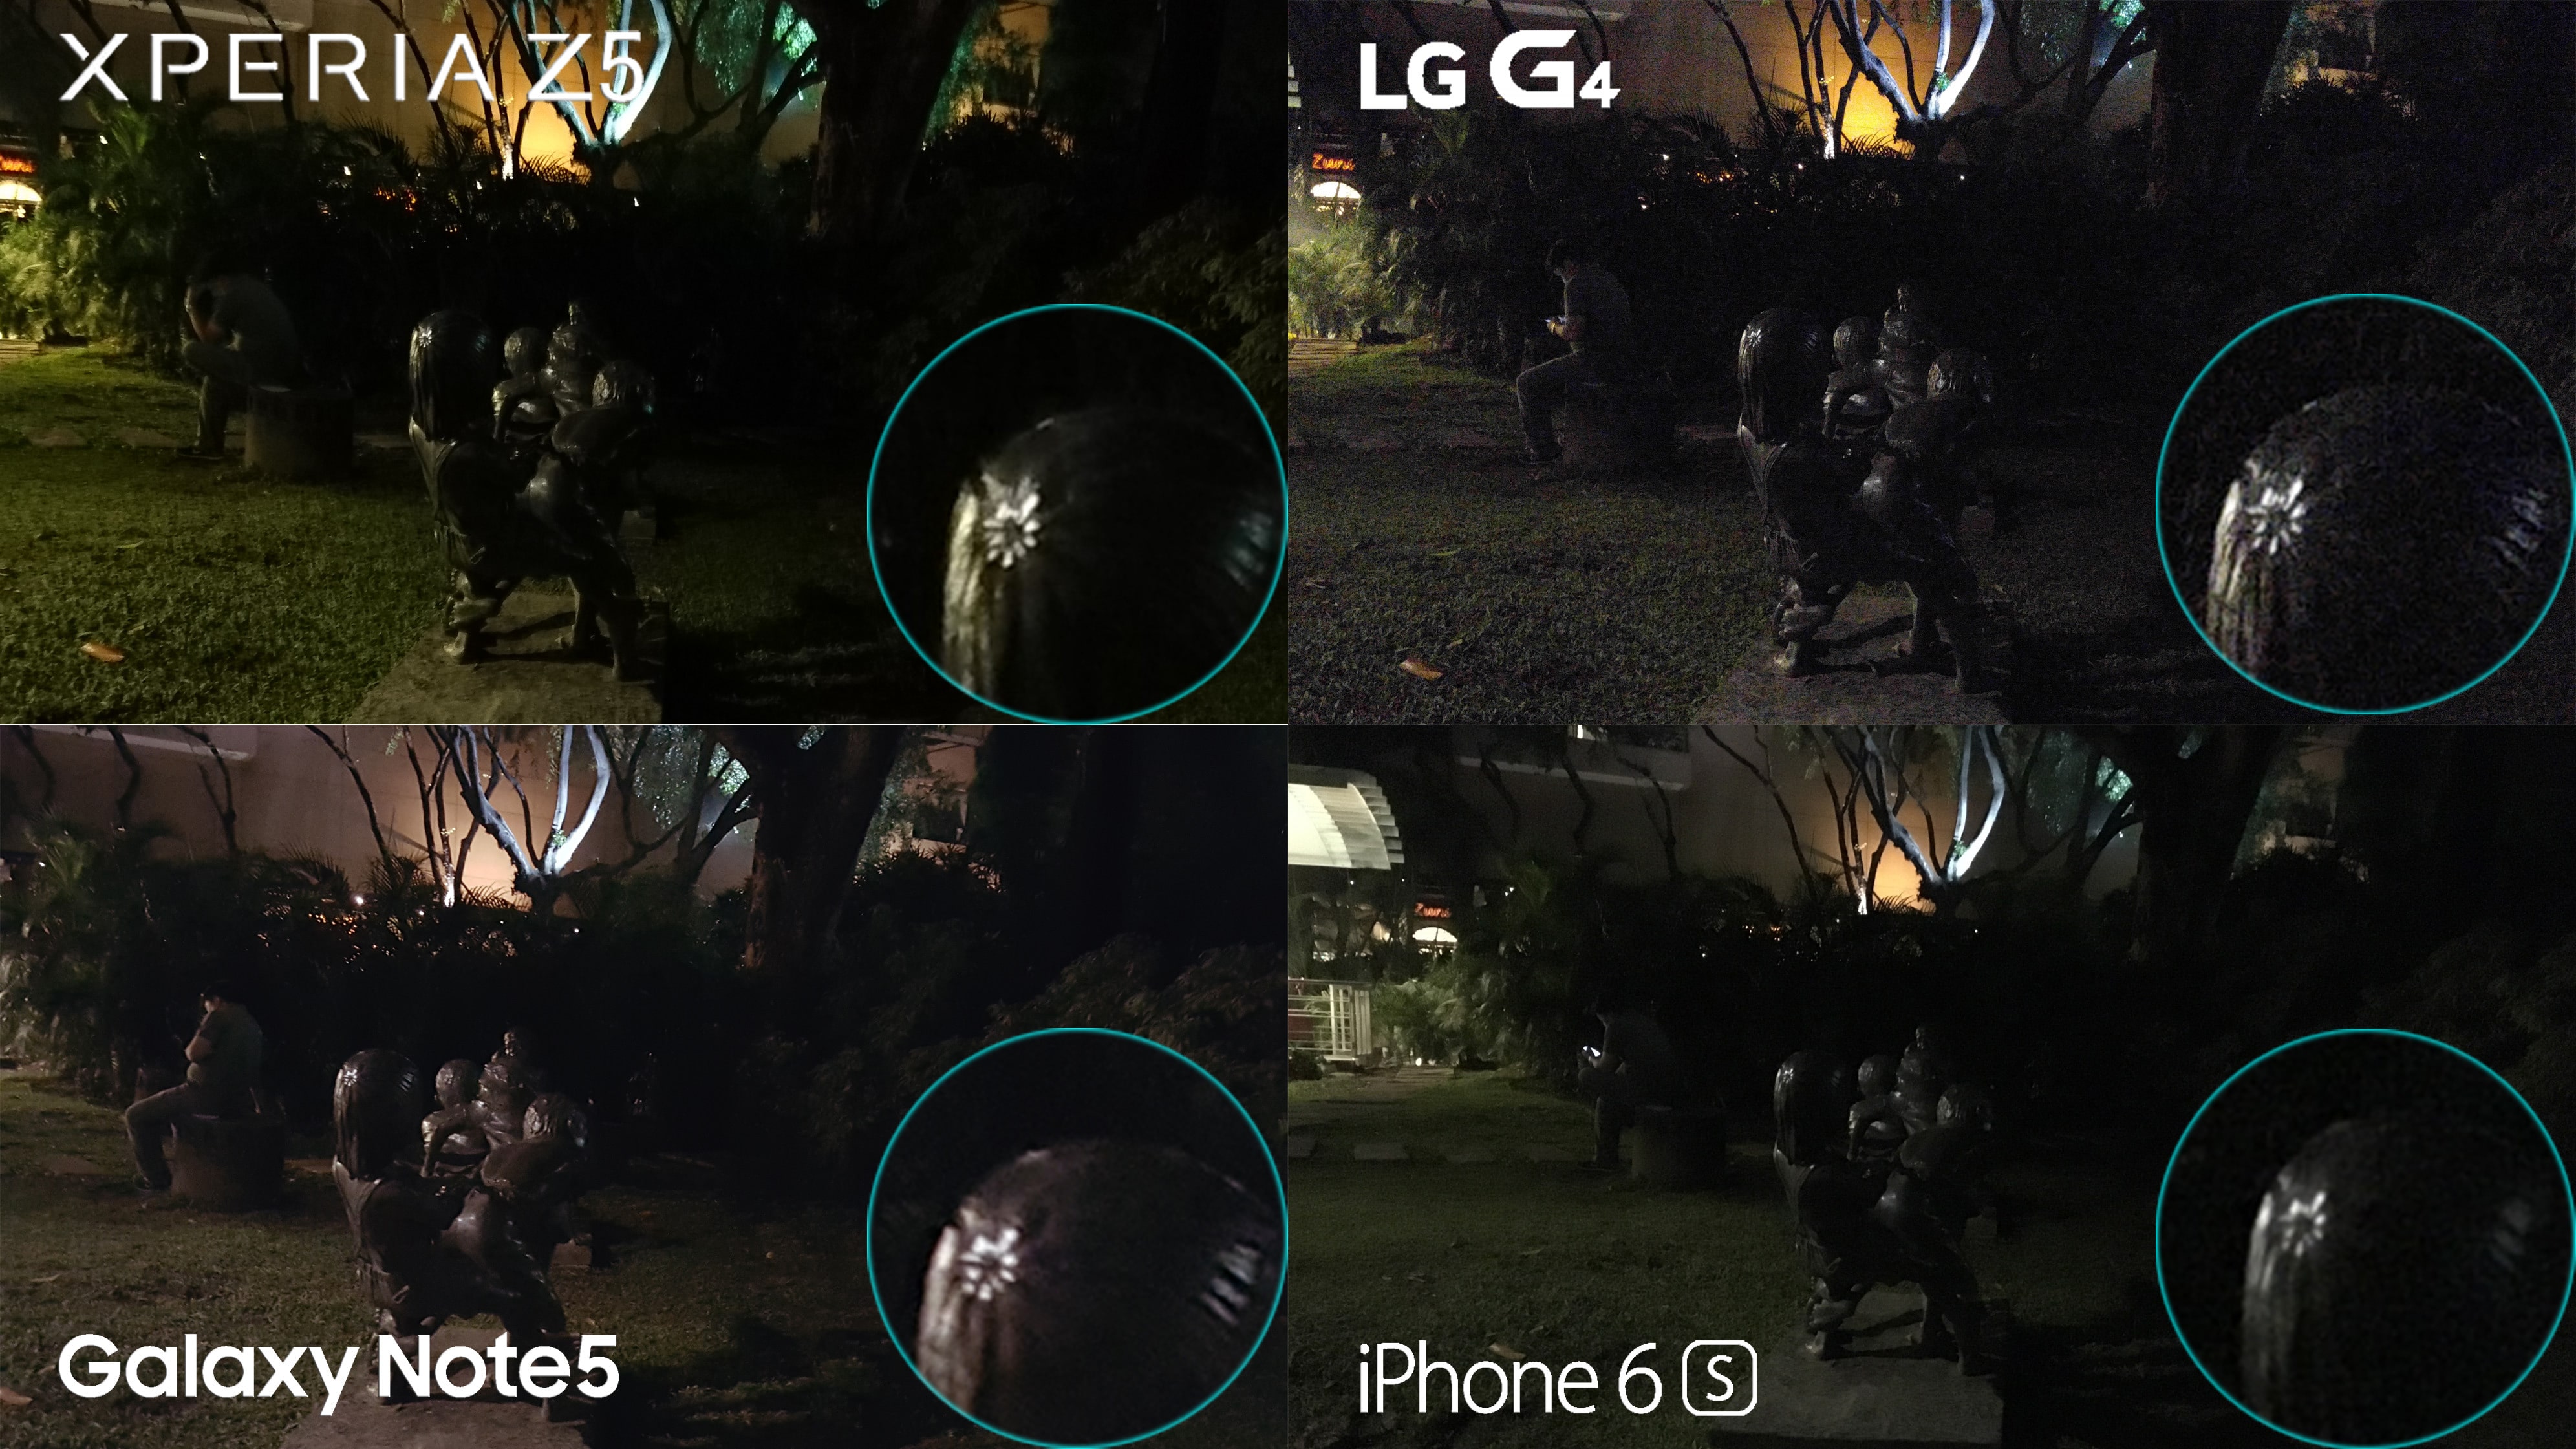 xperia-z5-lg-g4-iphone-6s-galaxy-note-5-camera-review-comparison1-min